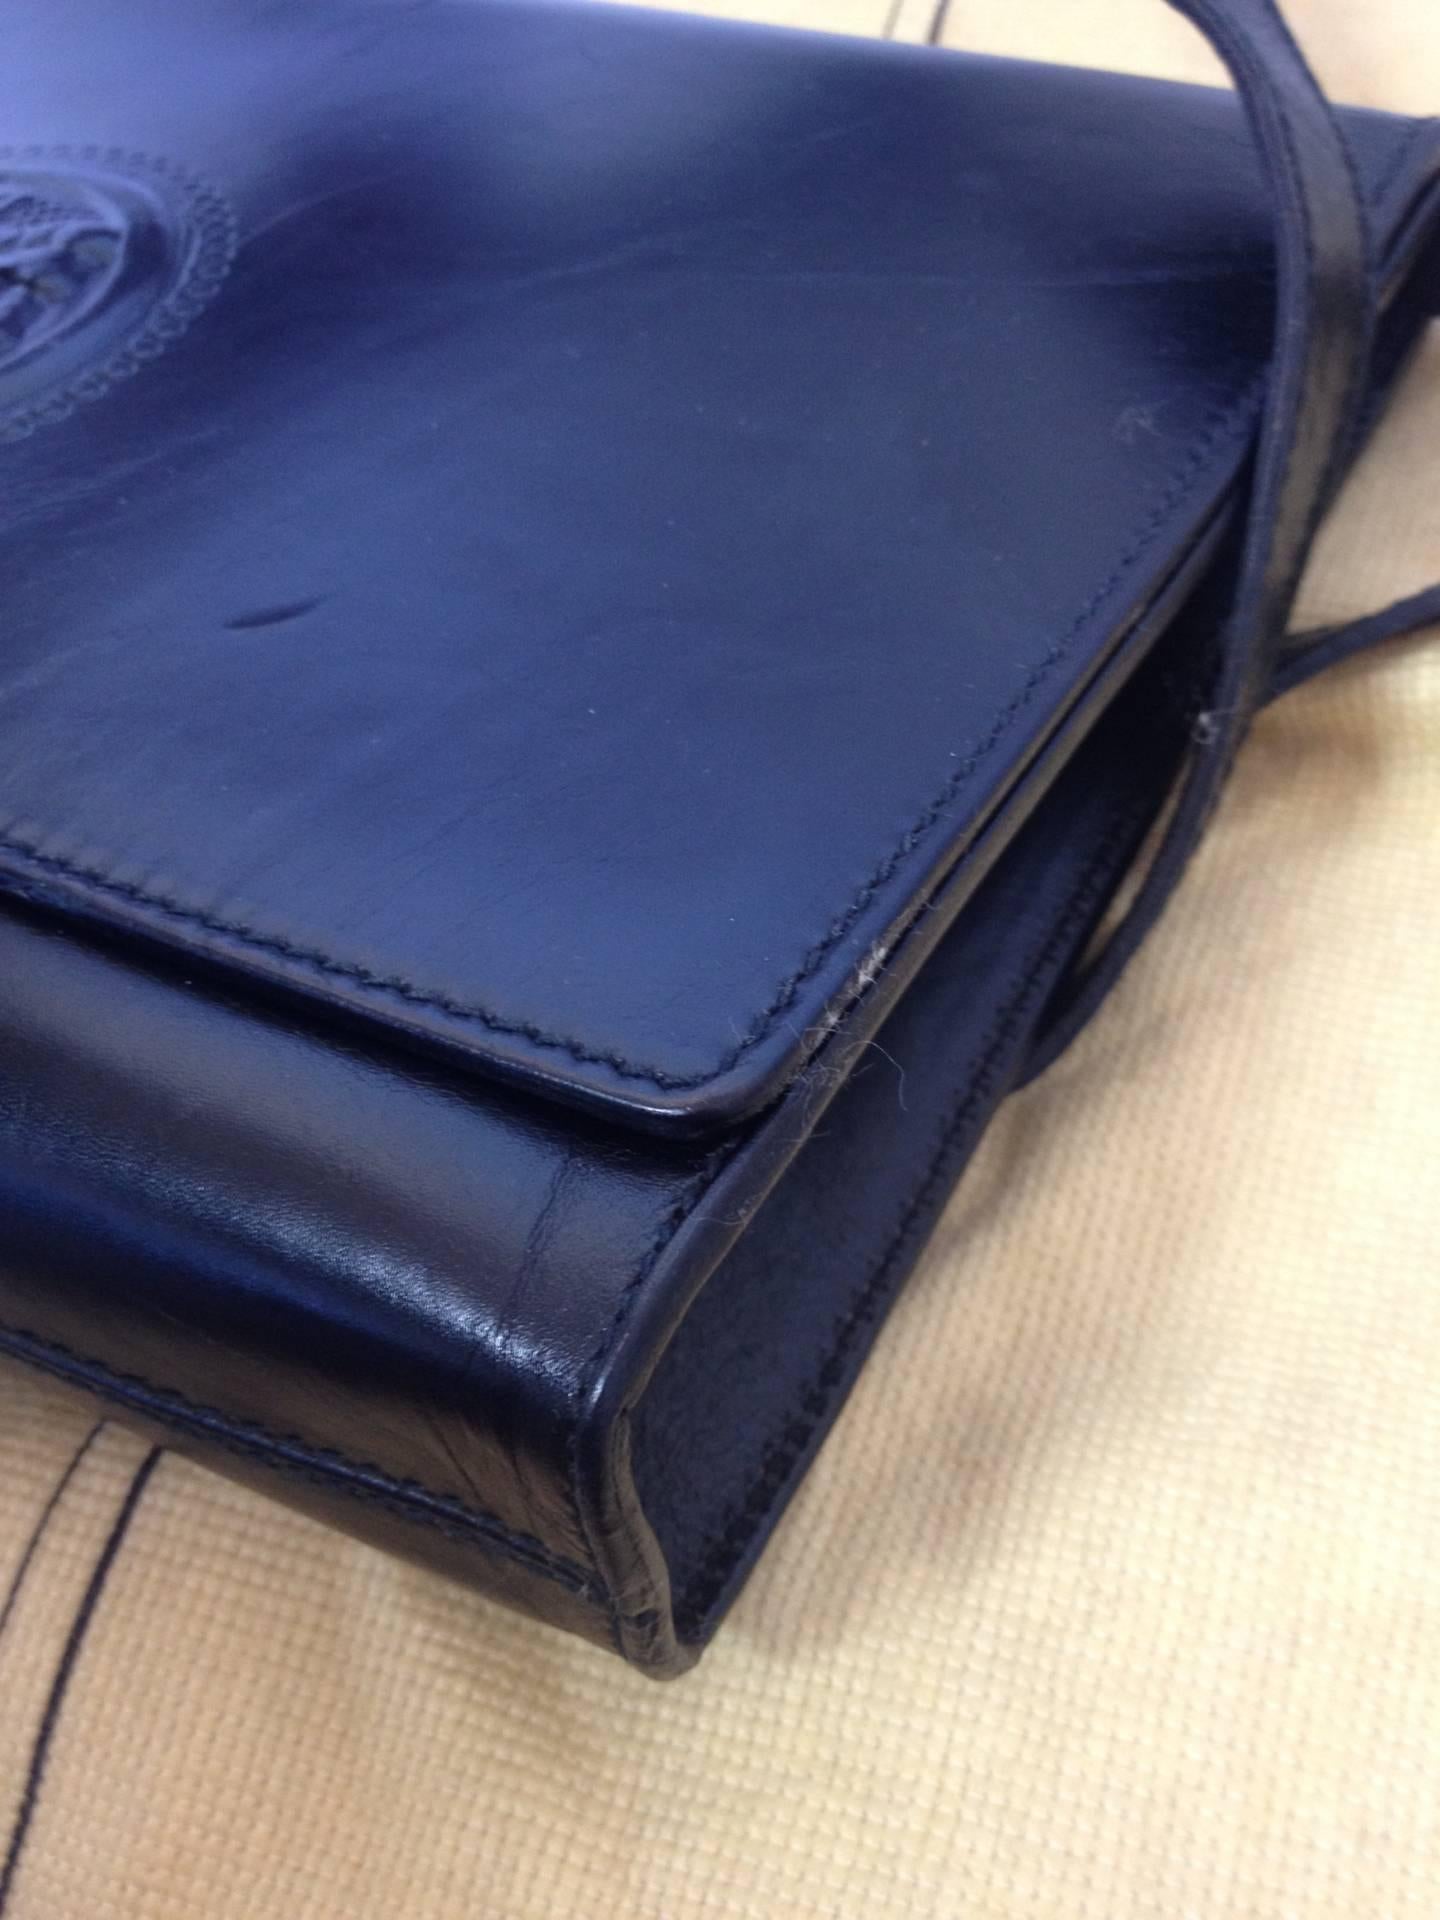 Women's or Men's Vintage FENDI black leather shoulder bag, large clutch purse with iconic logo 